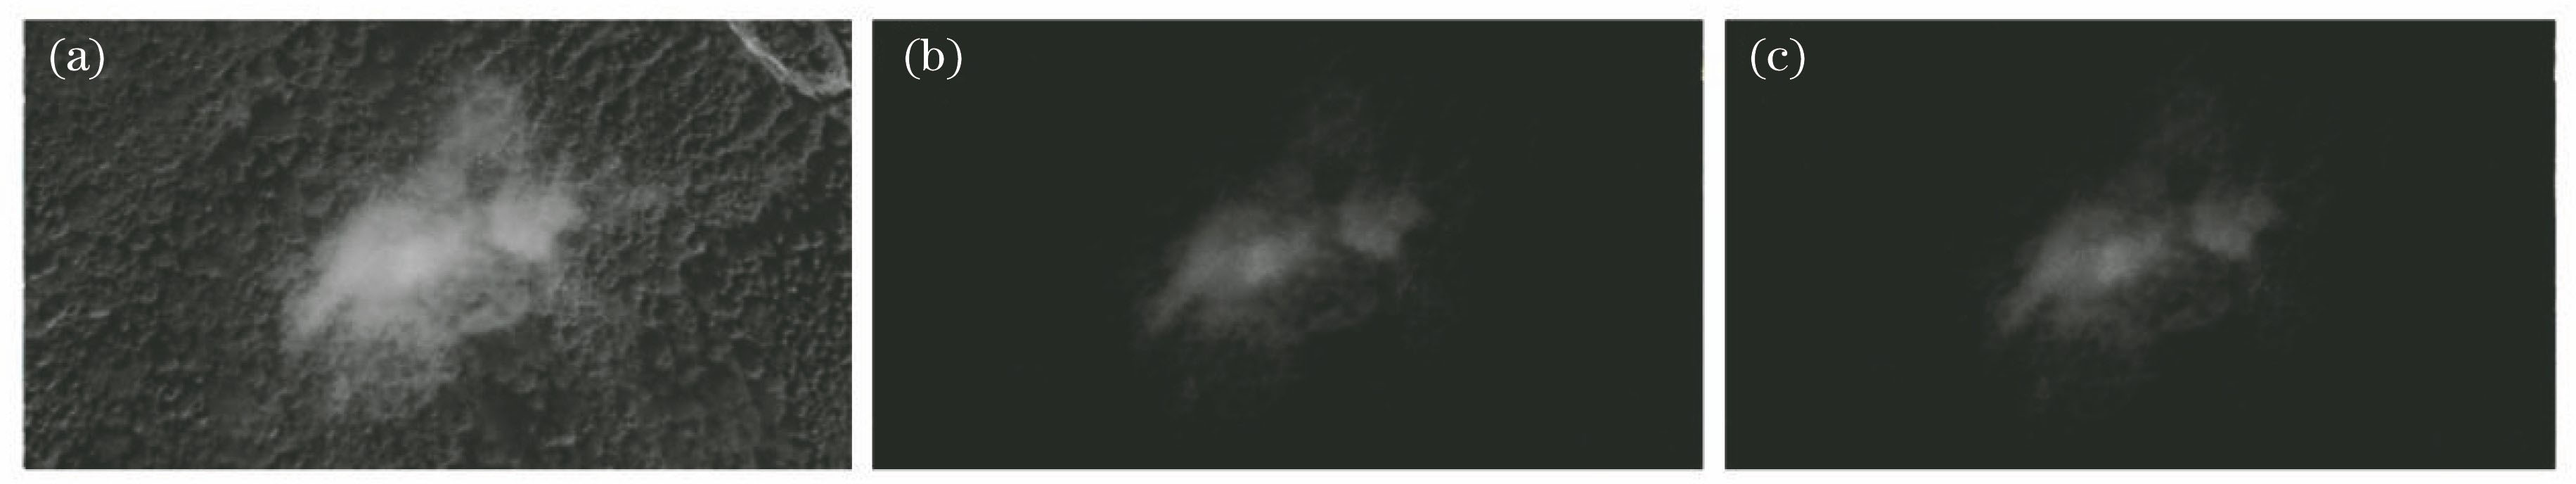 Image segmentation. (a) Original image; (b) dense fog area; (c) thinner fog area